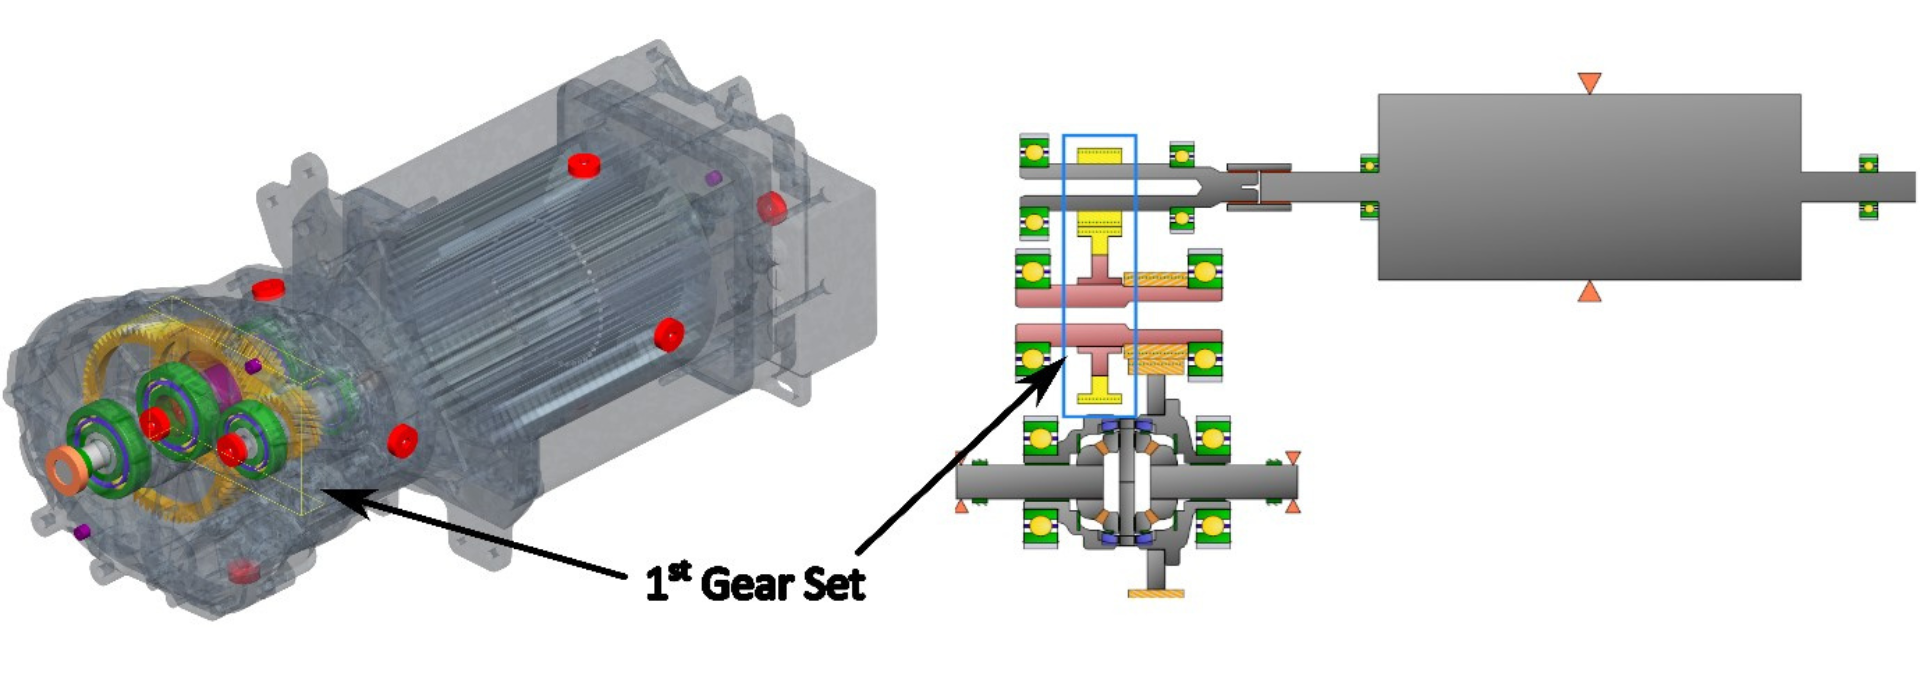 Electric drivetrain example showing gear set.